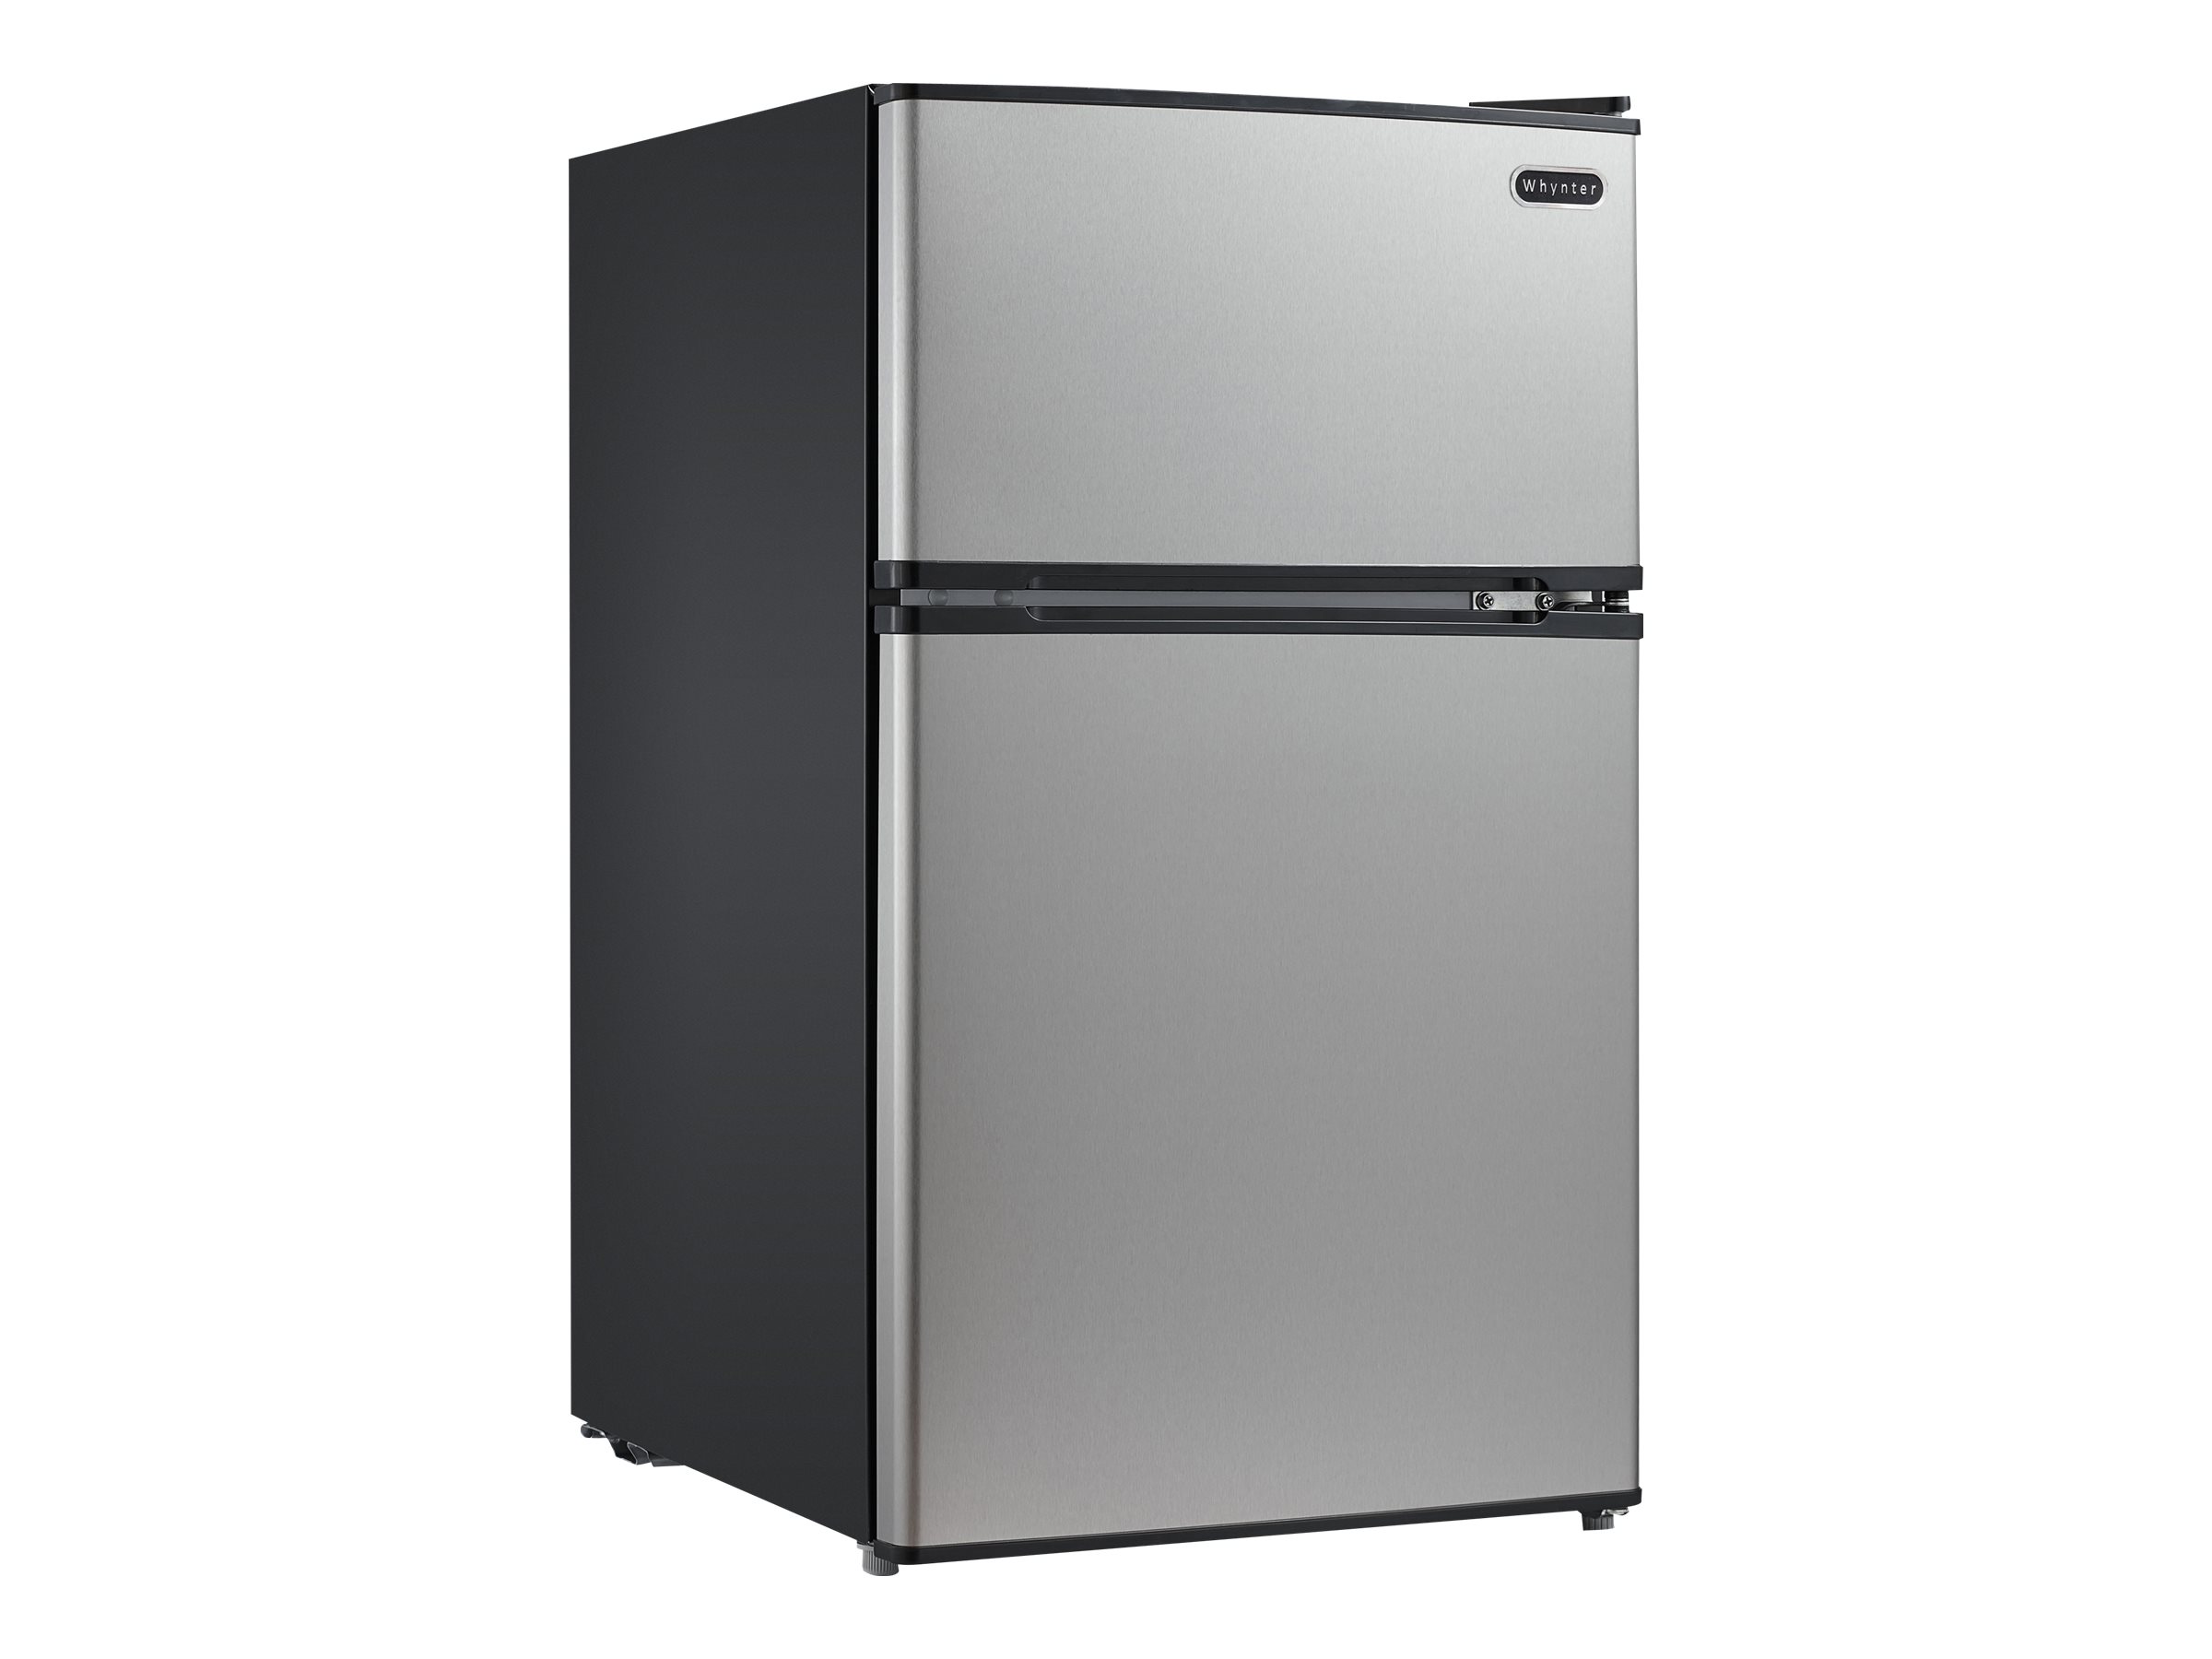 Whynter MRF-340DS Refrigerator Freezer Freestanding Width 19 in, Depth 23 in, Height 33 in Top-Freezer, Stainless Steel - image 3 of 6